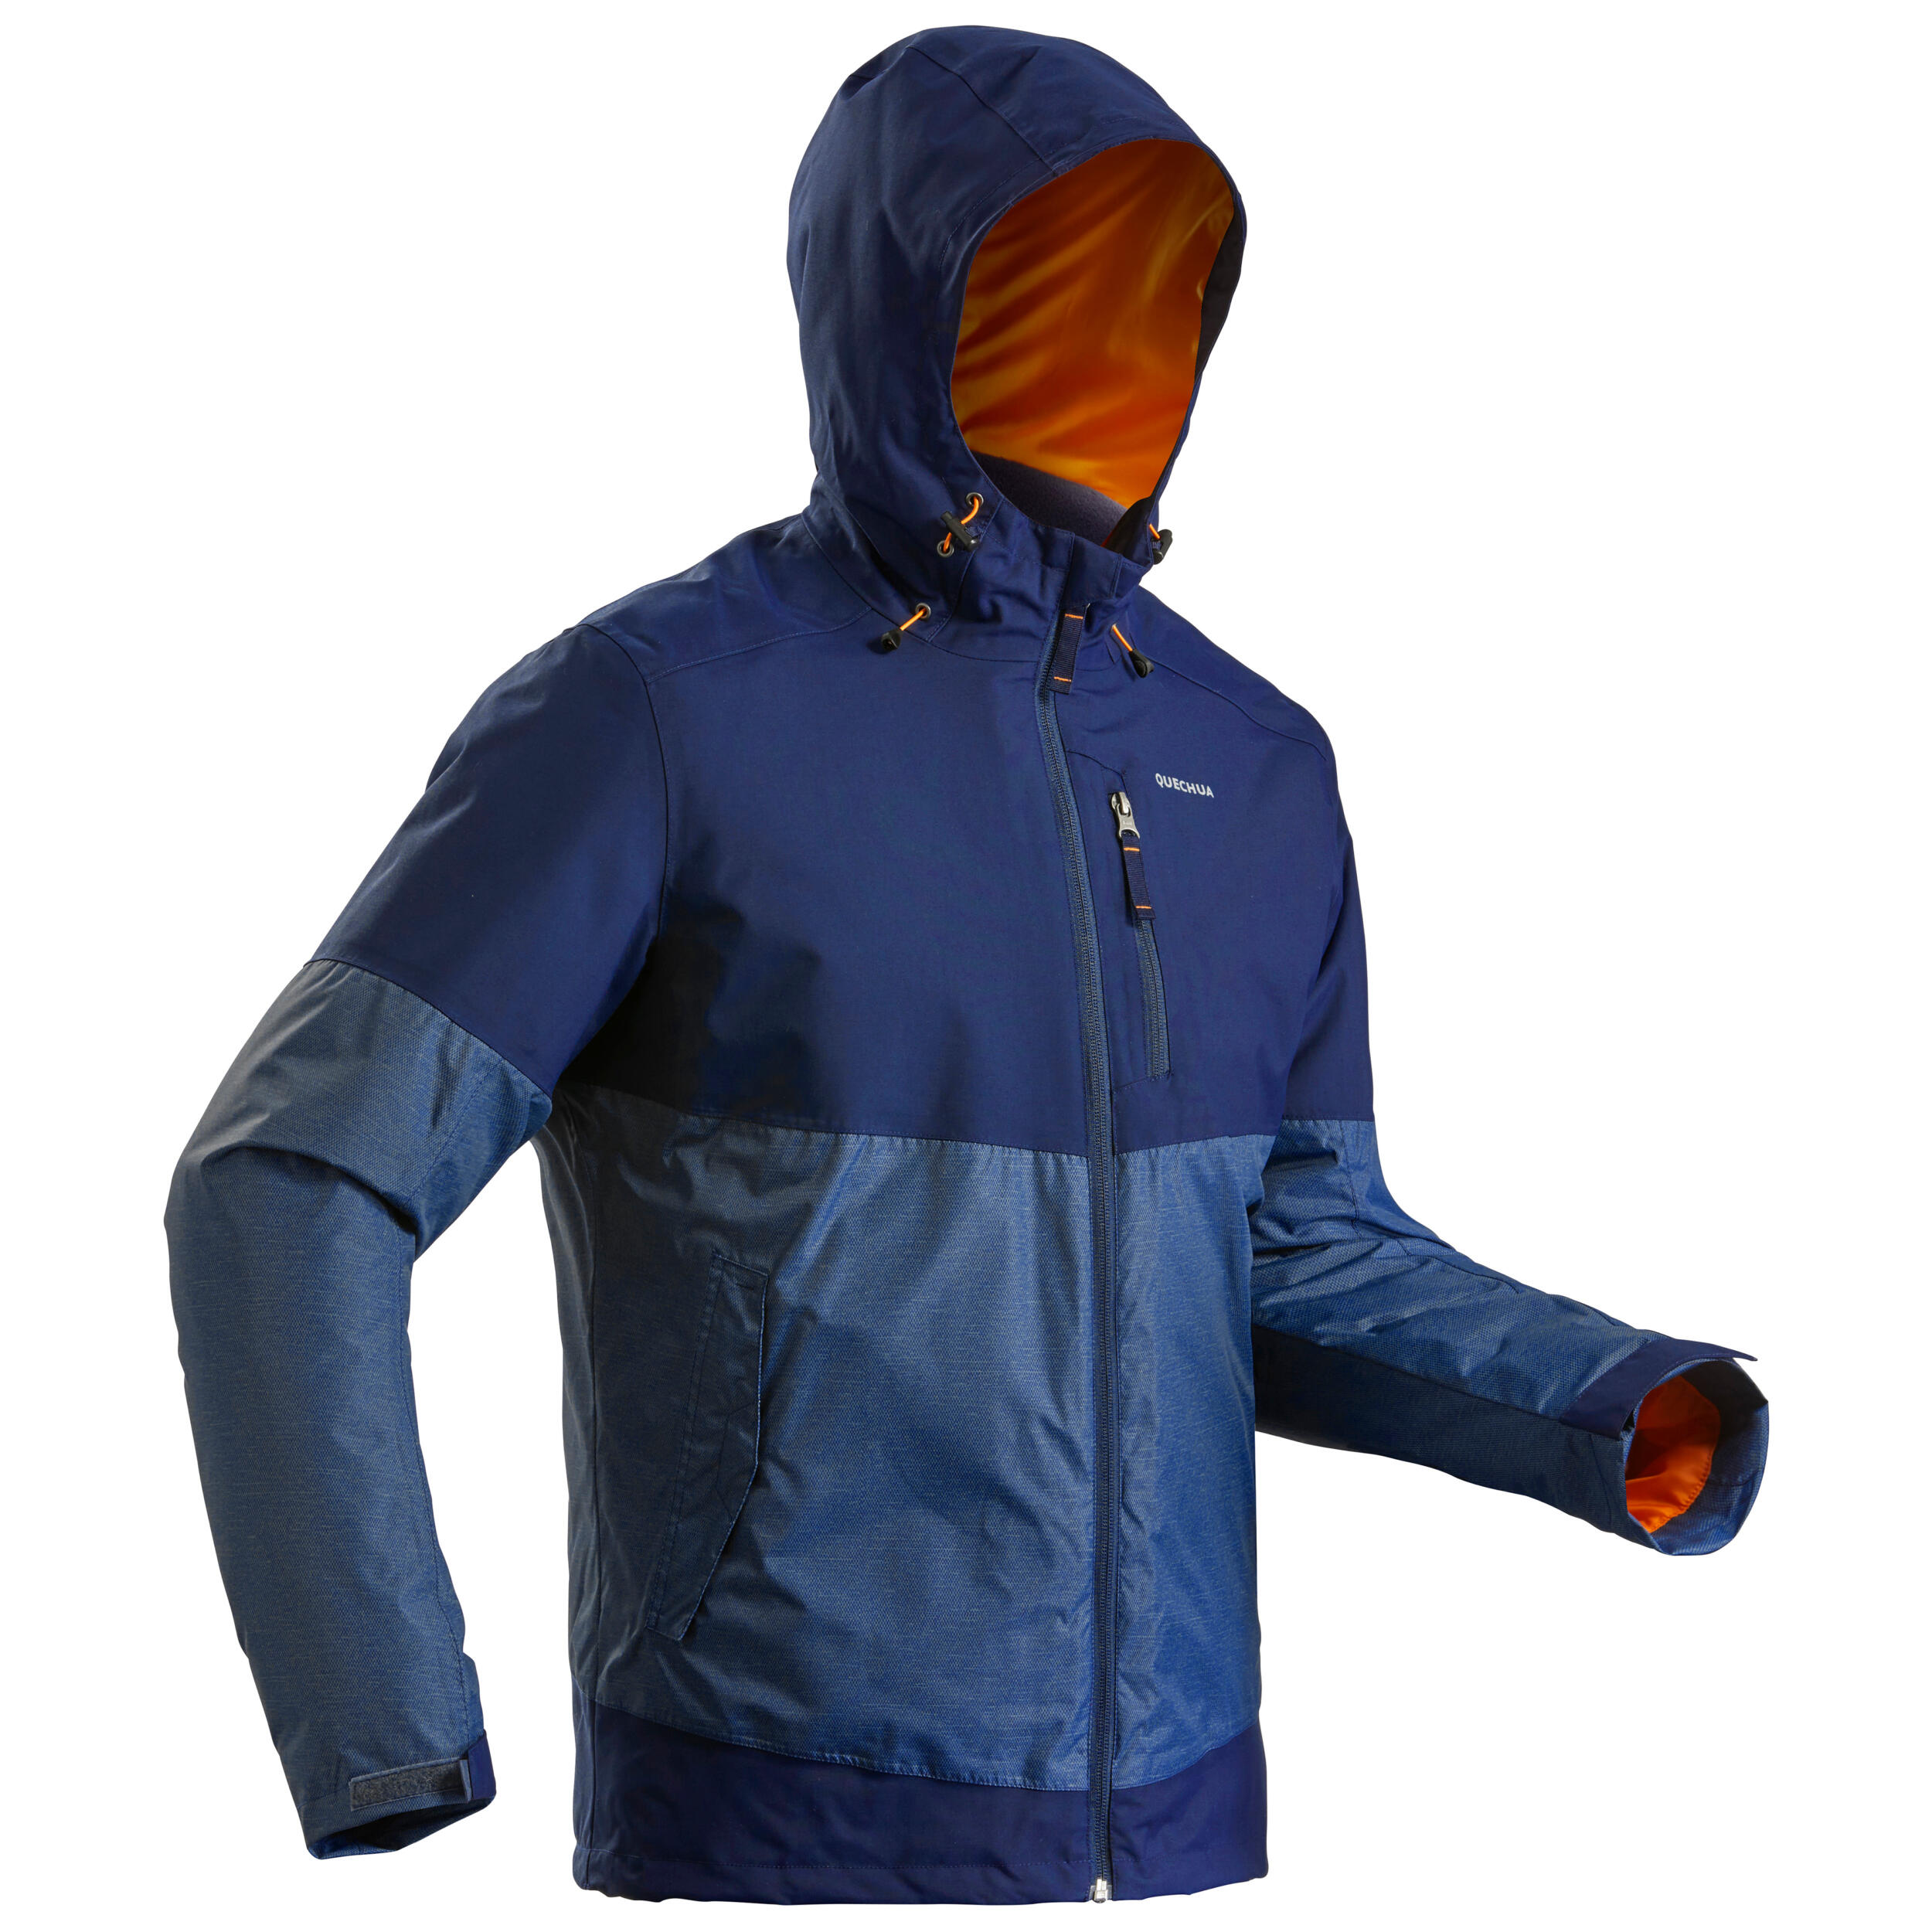 decathlon all weather jacket